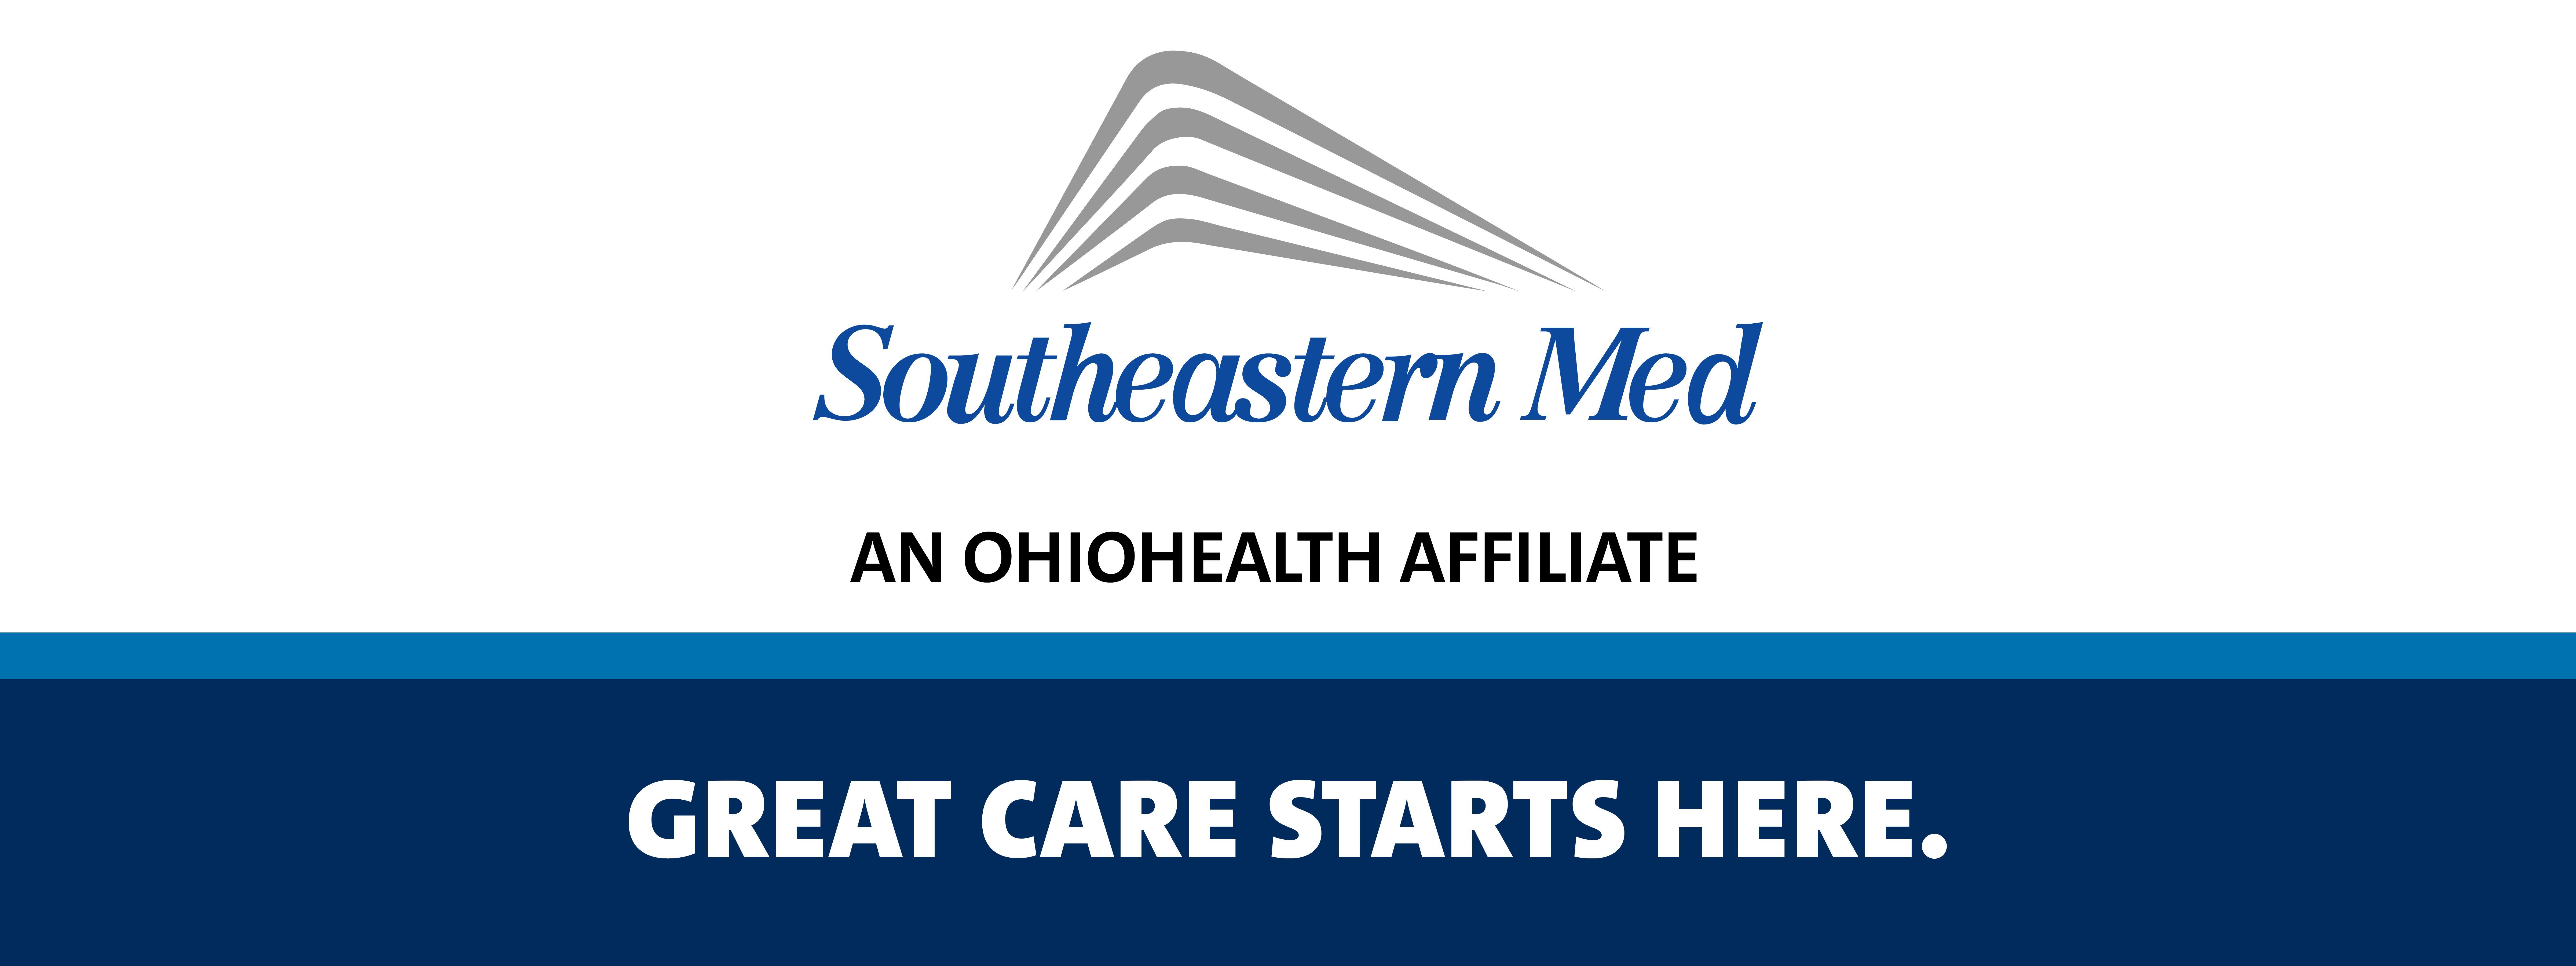 OhioHealth Logo - OhioHealth Partnership - Southeastern Med Hospital - Cambridge Ohio